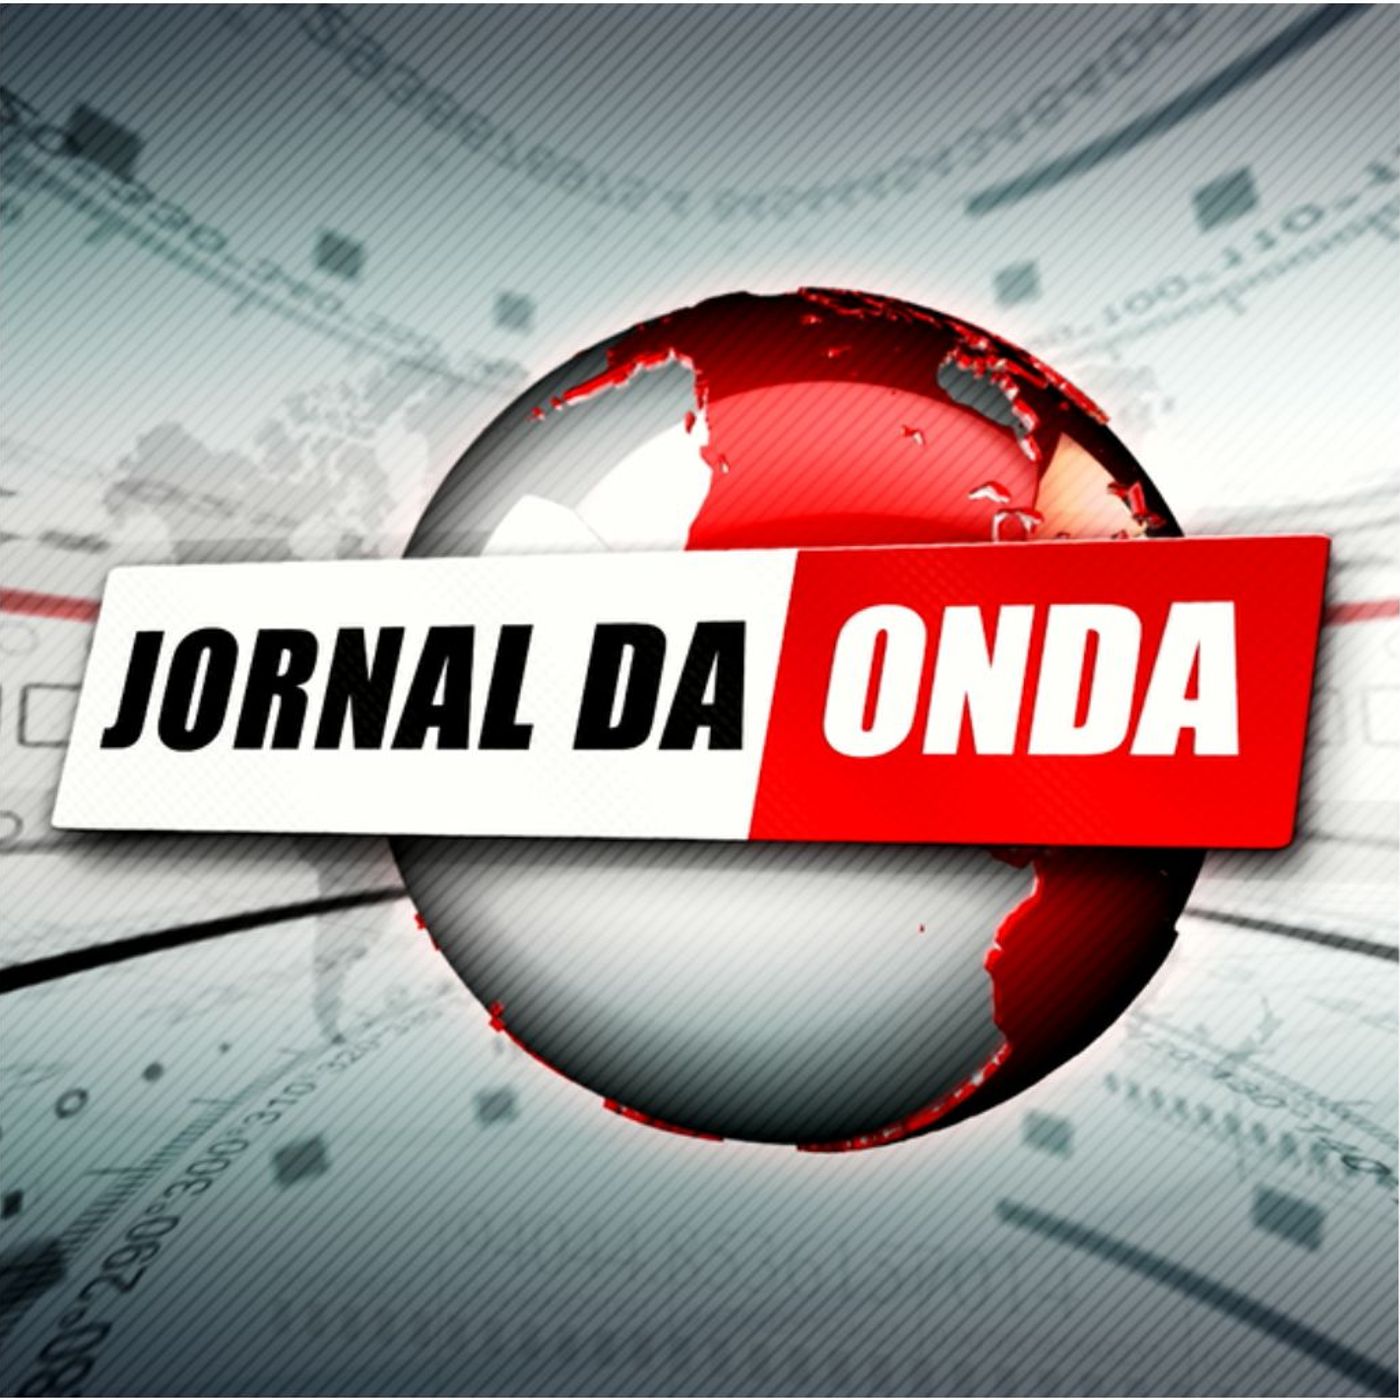 Jornal da Onda - Episódio 01